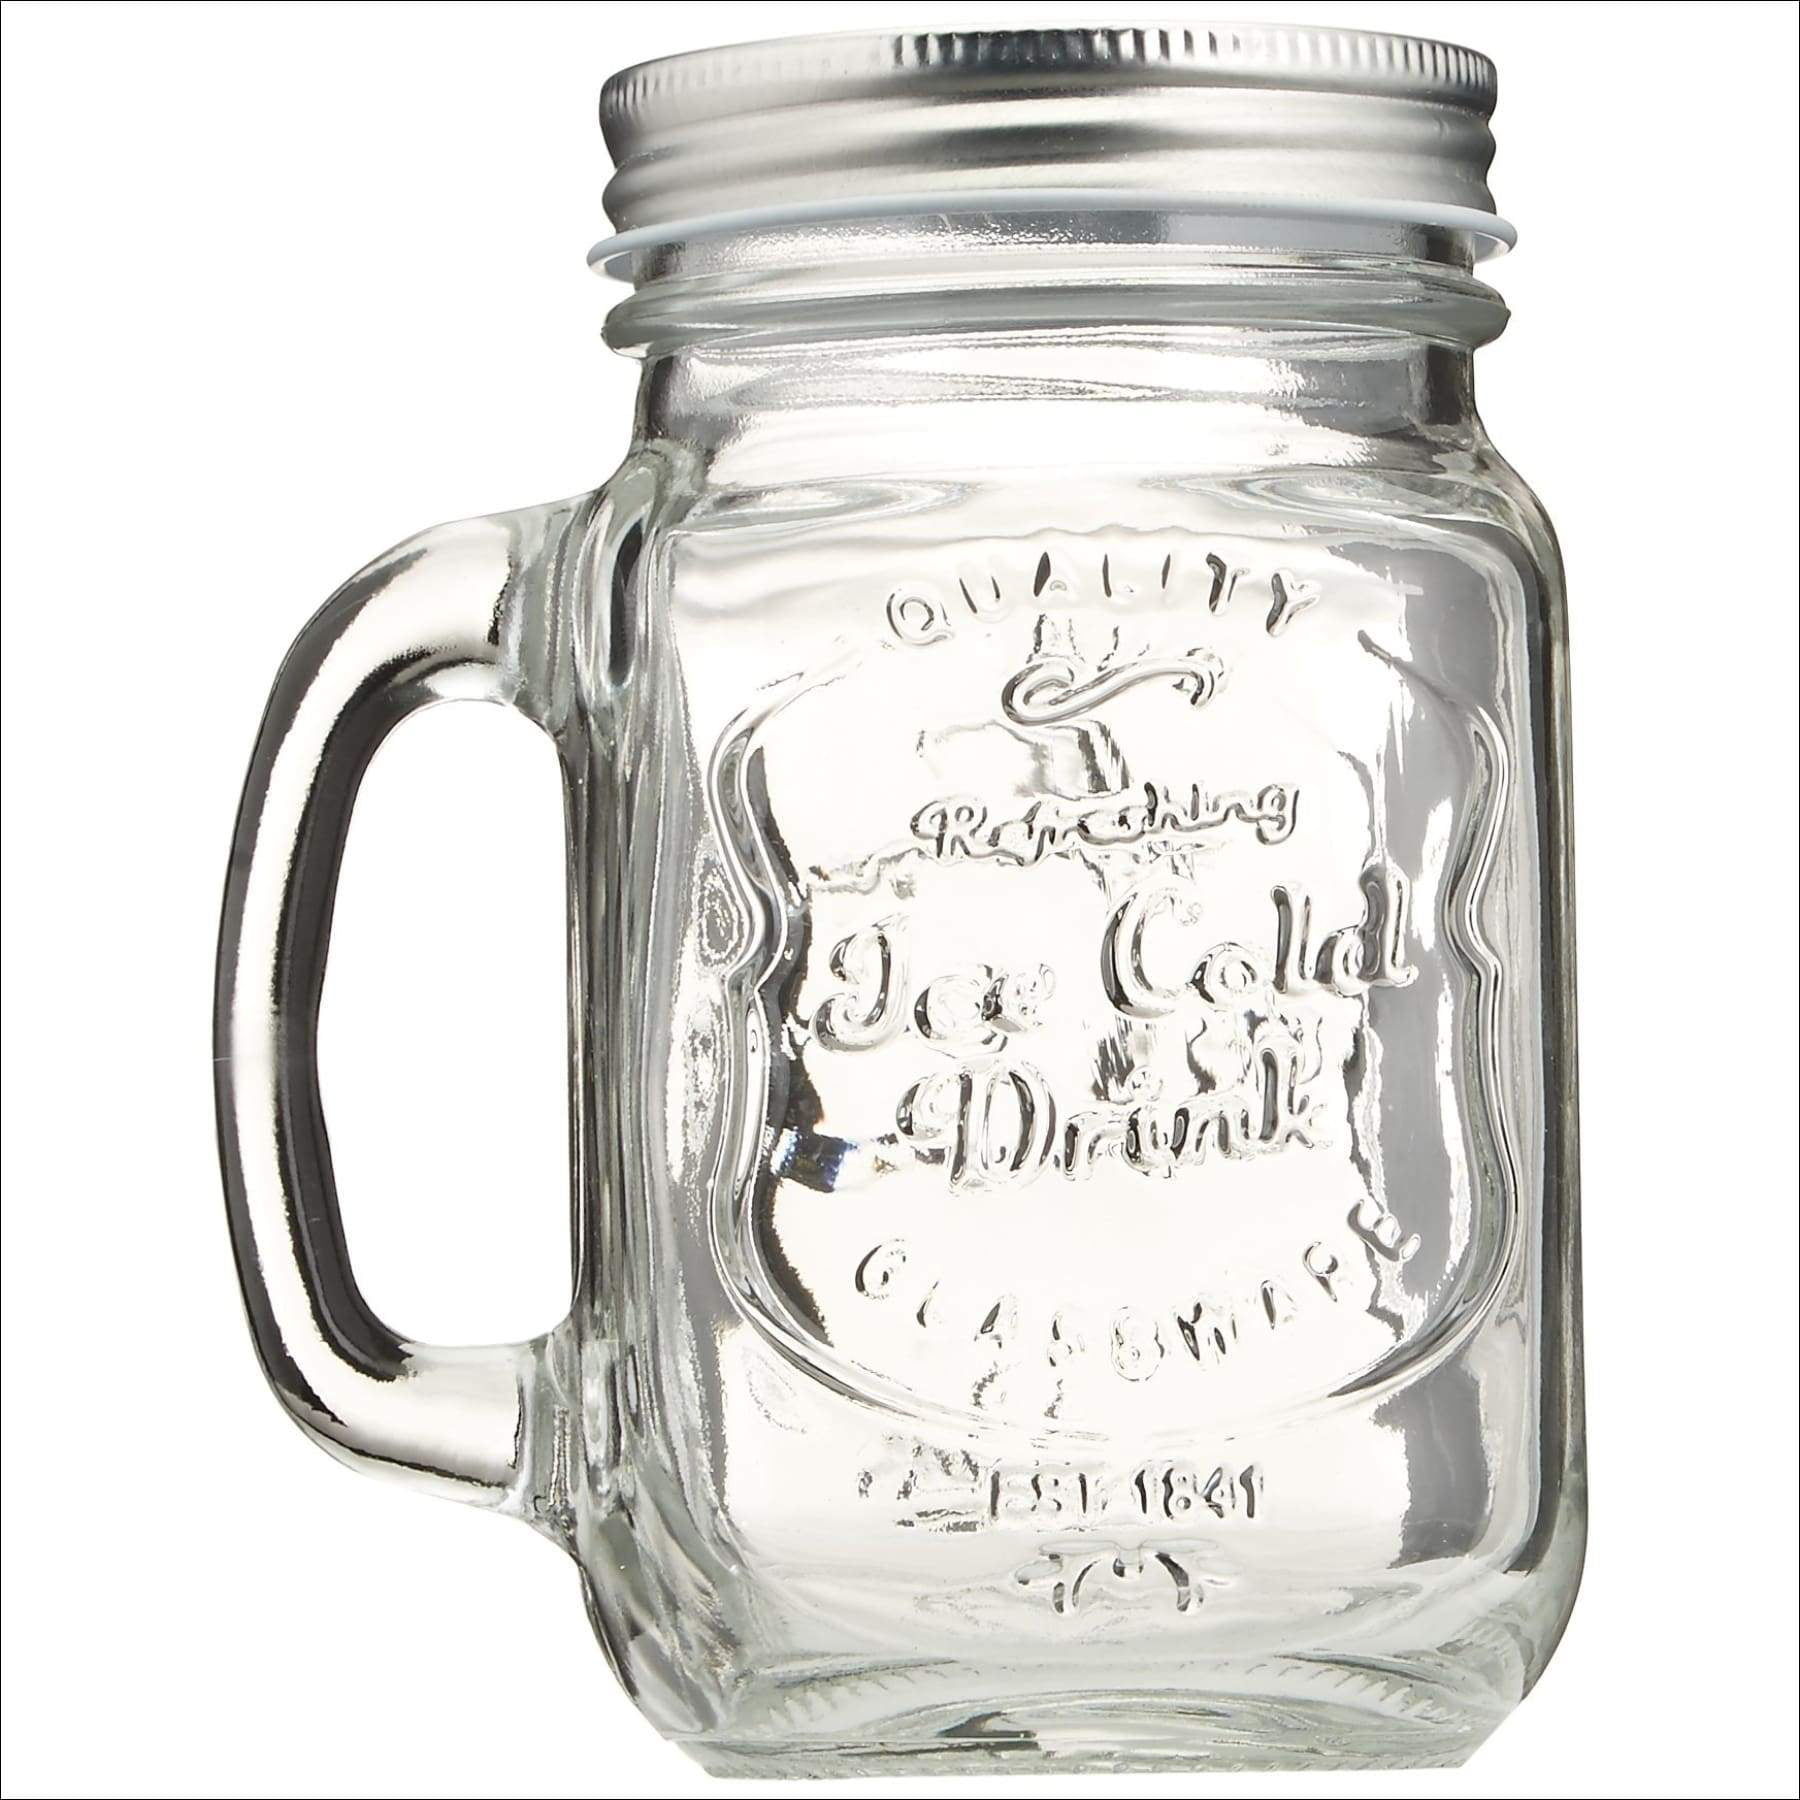 16 oz Each Estilo Mason Jar Mugs with Handle and Straws Old Fashioned Drinking Glass Set 6